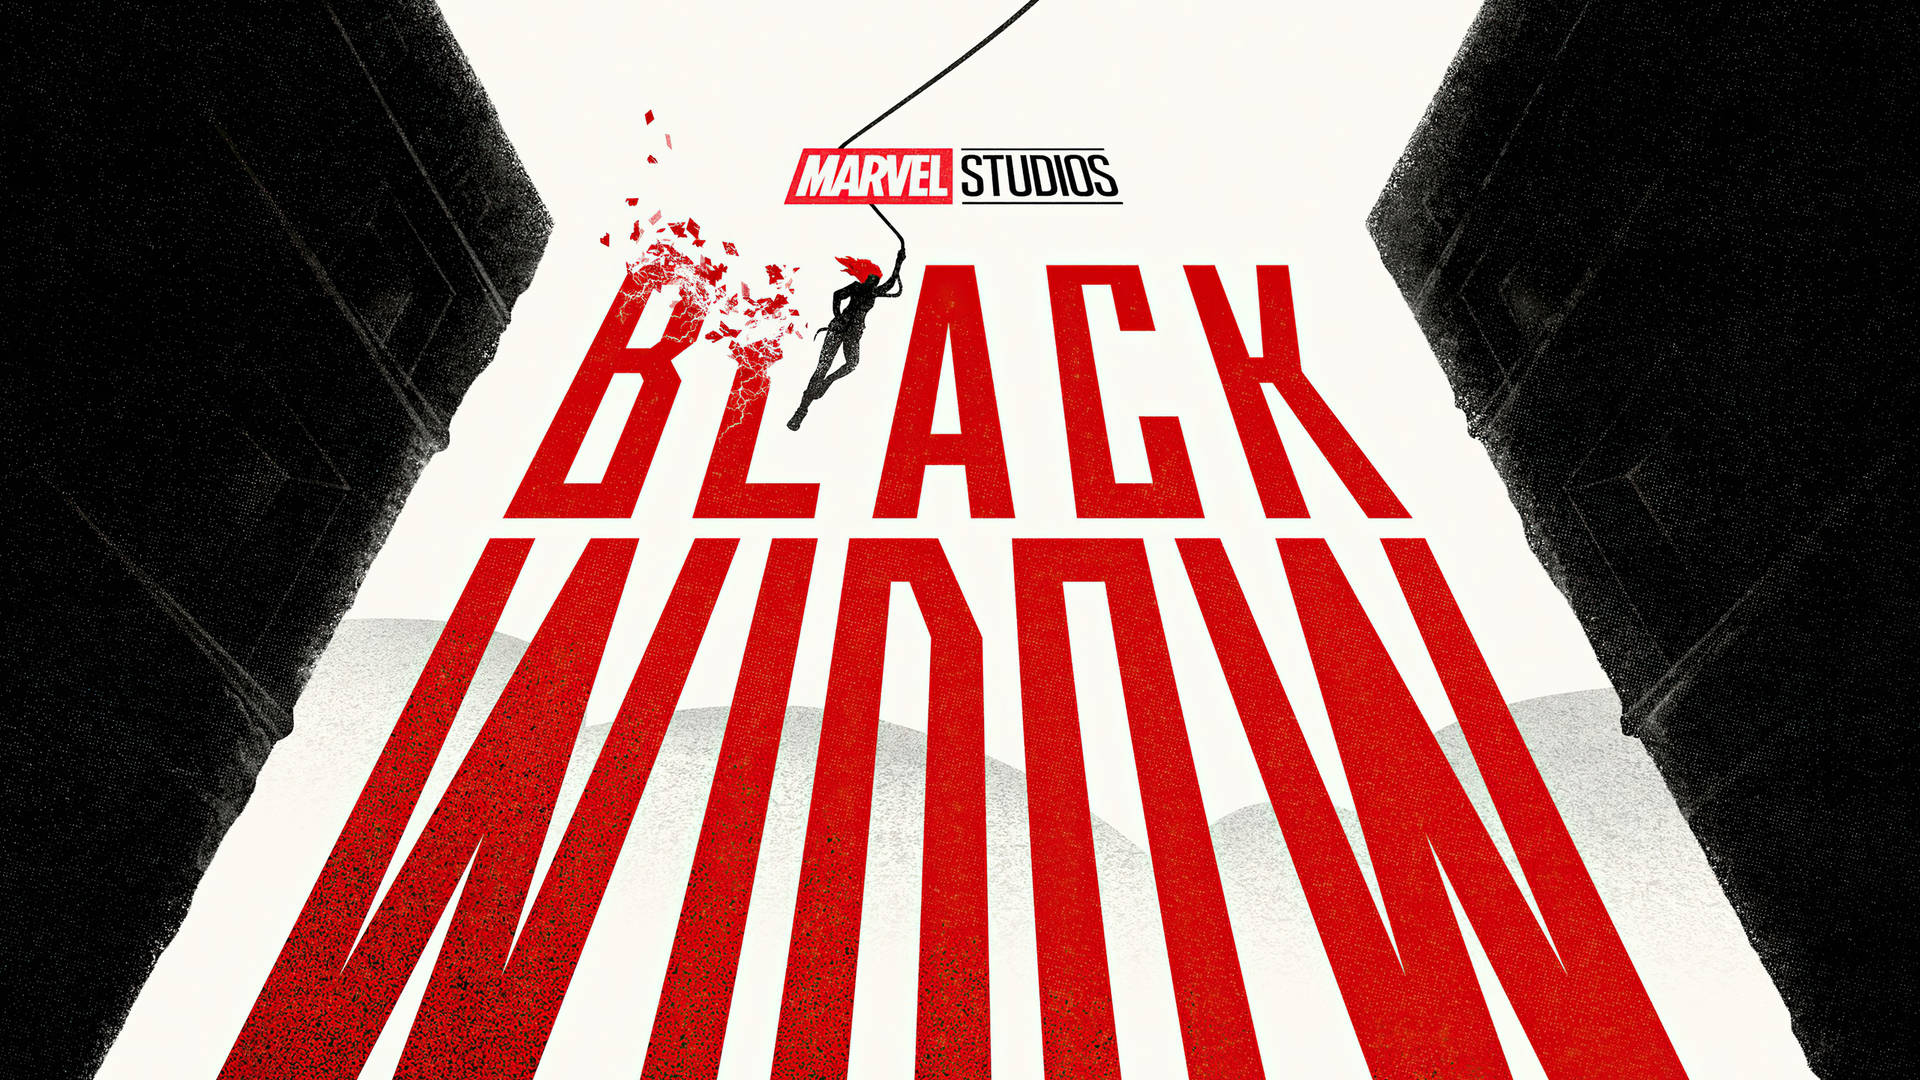 Black Widow Marvel Studios Background